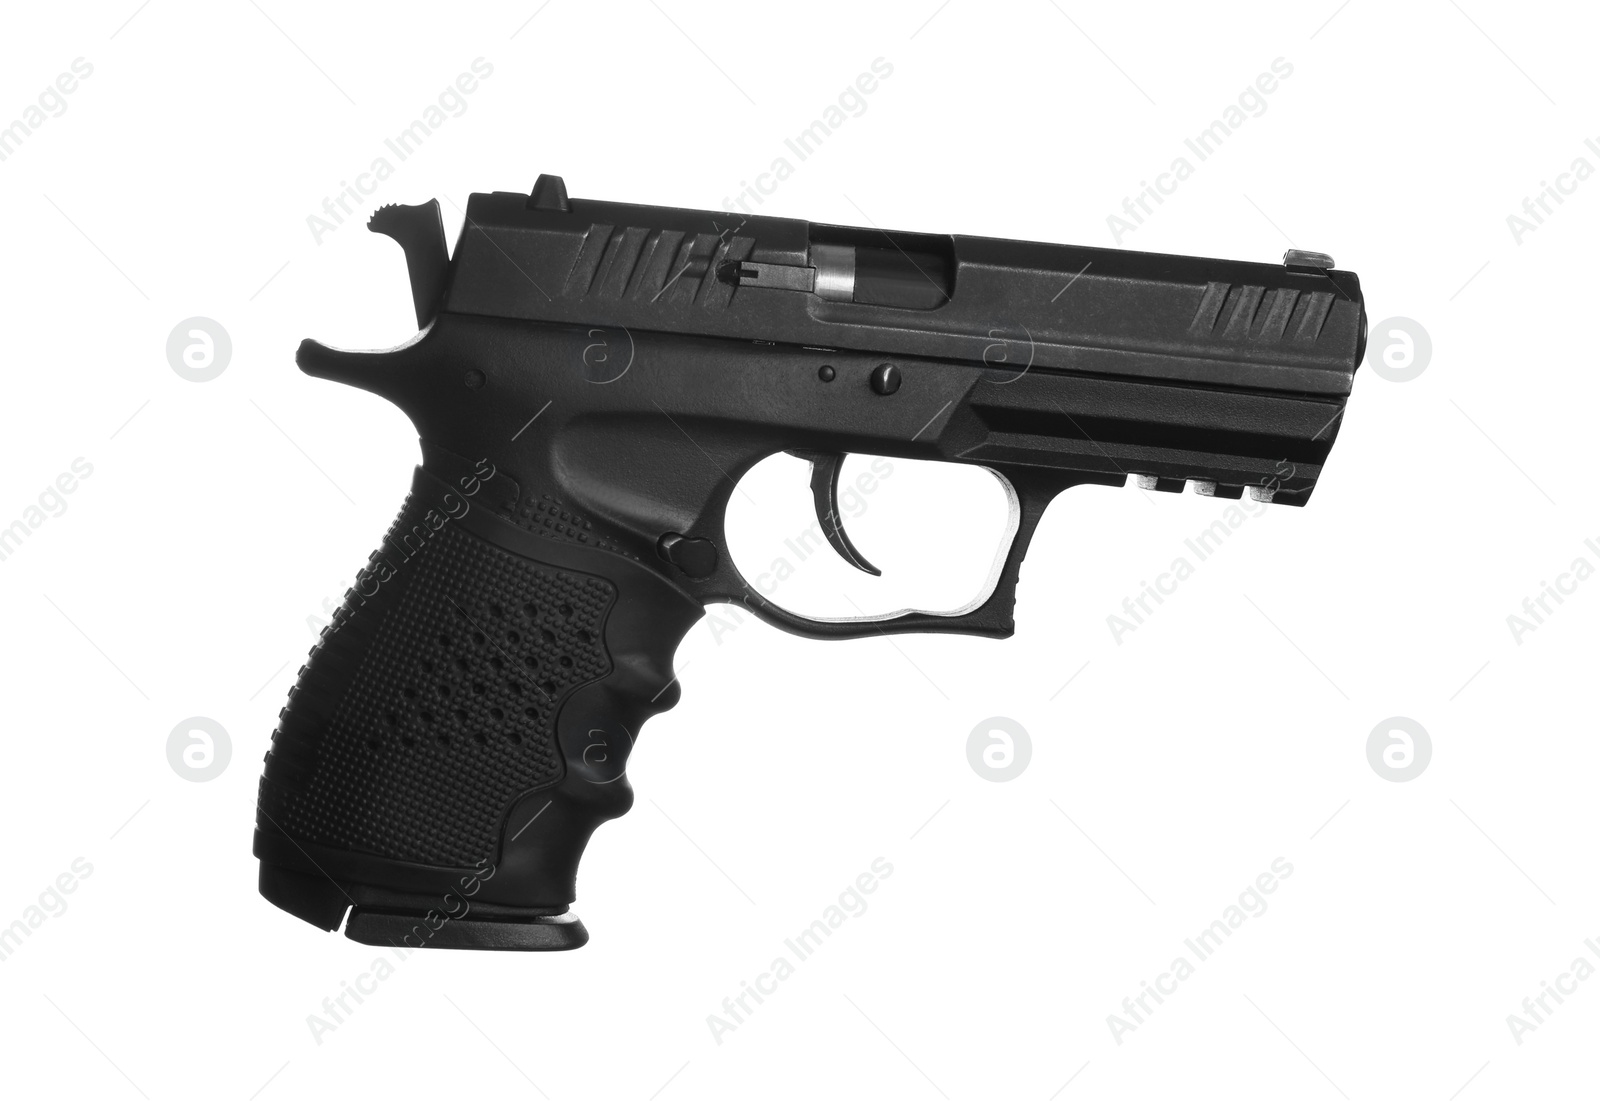 Photo of Standard handgun on white background. Semi-automatic pistol